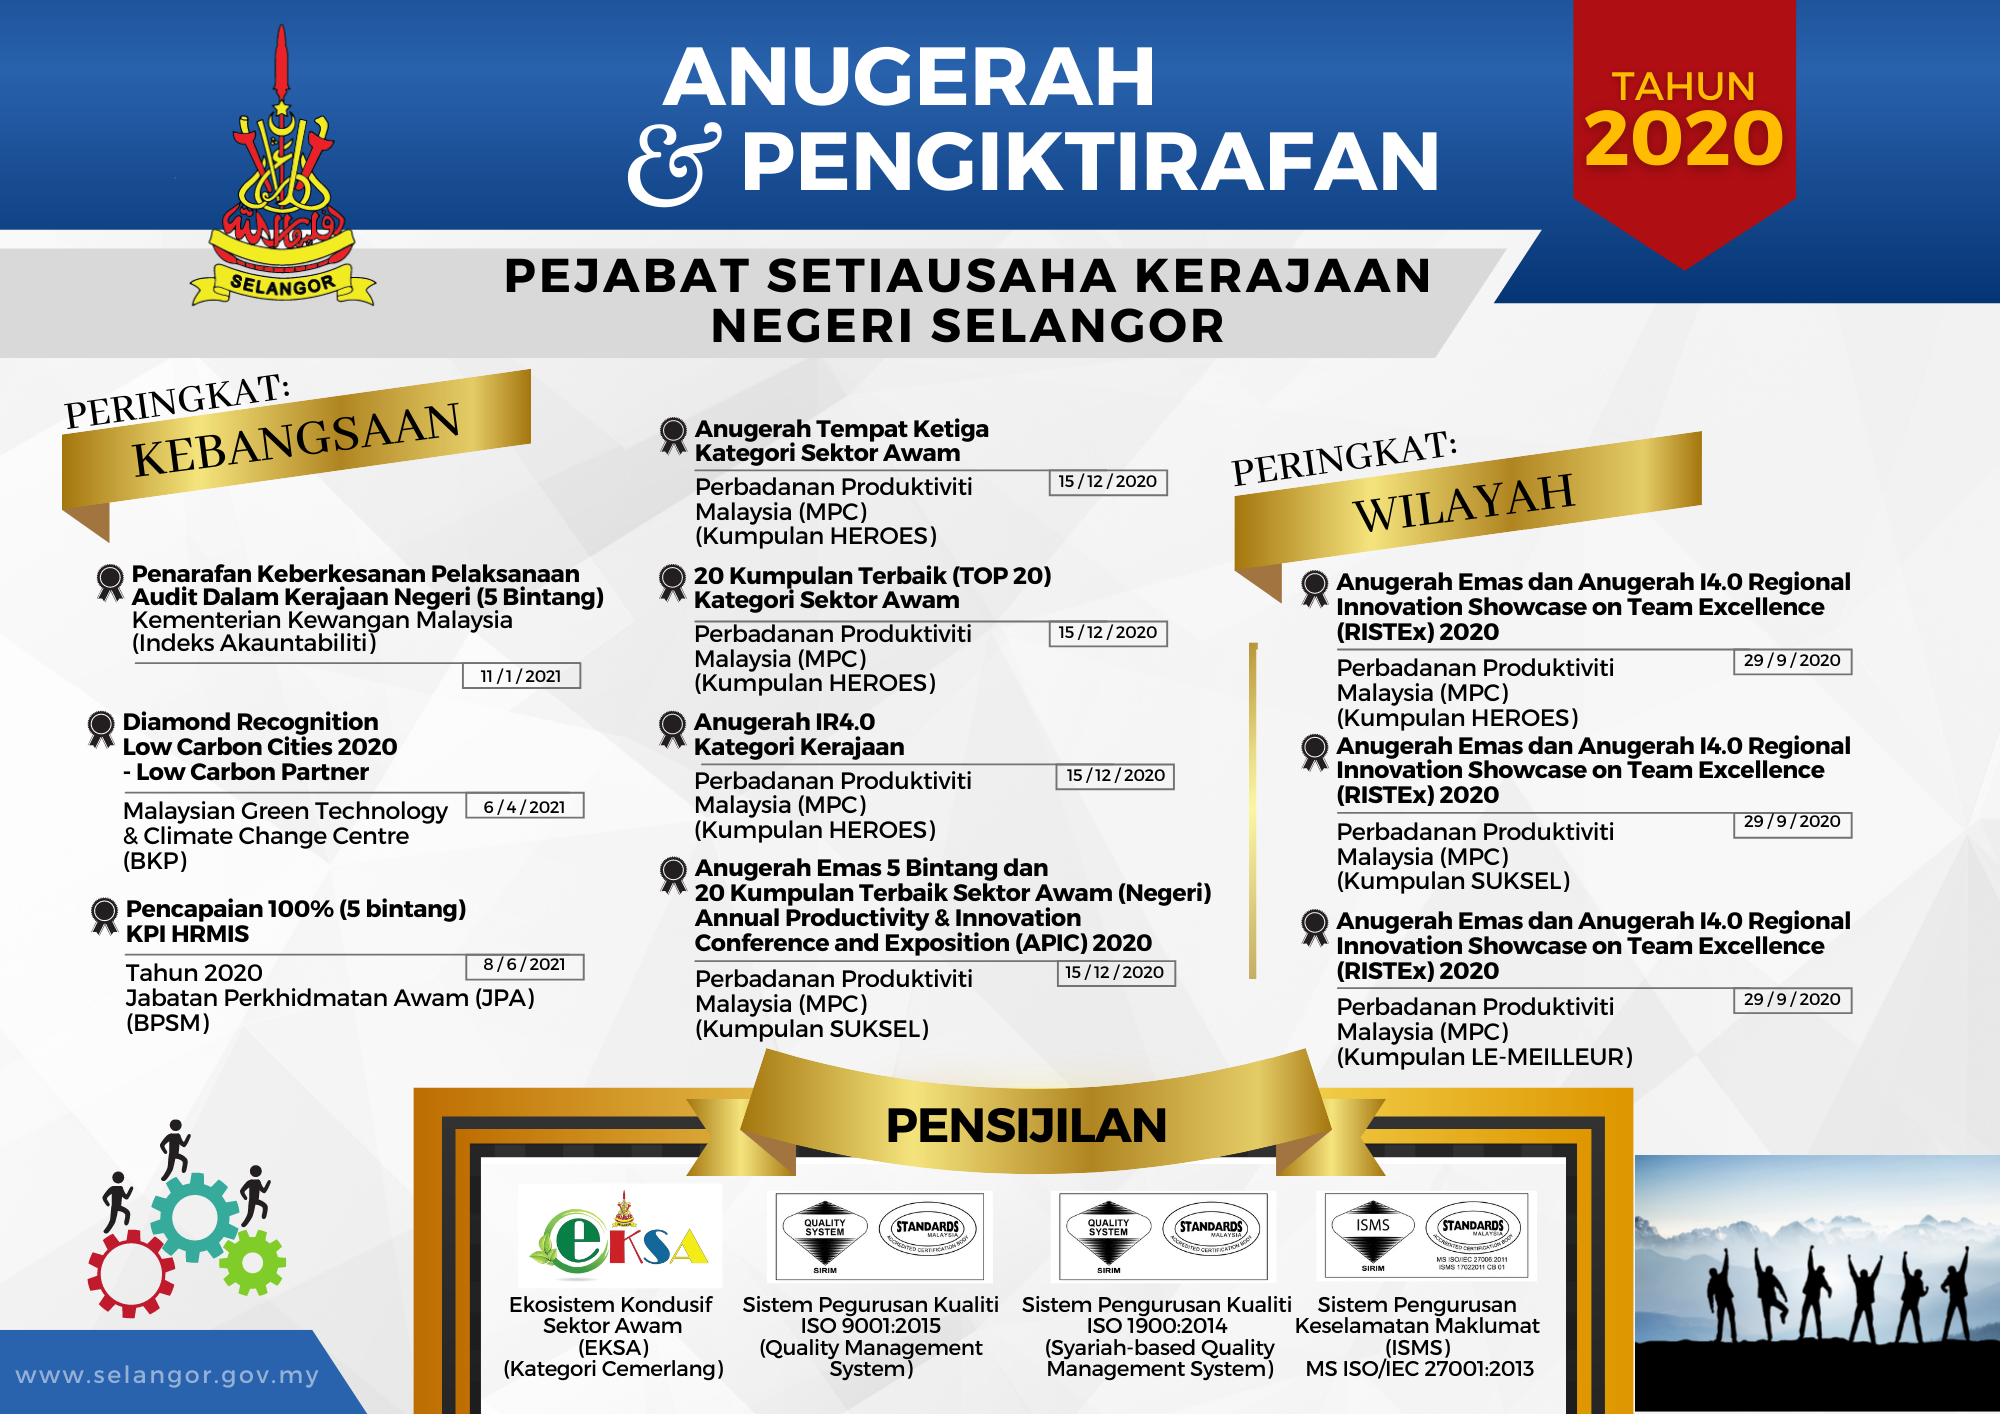 Pencapaian SUK Selangor 2020